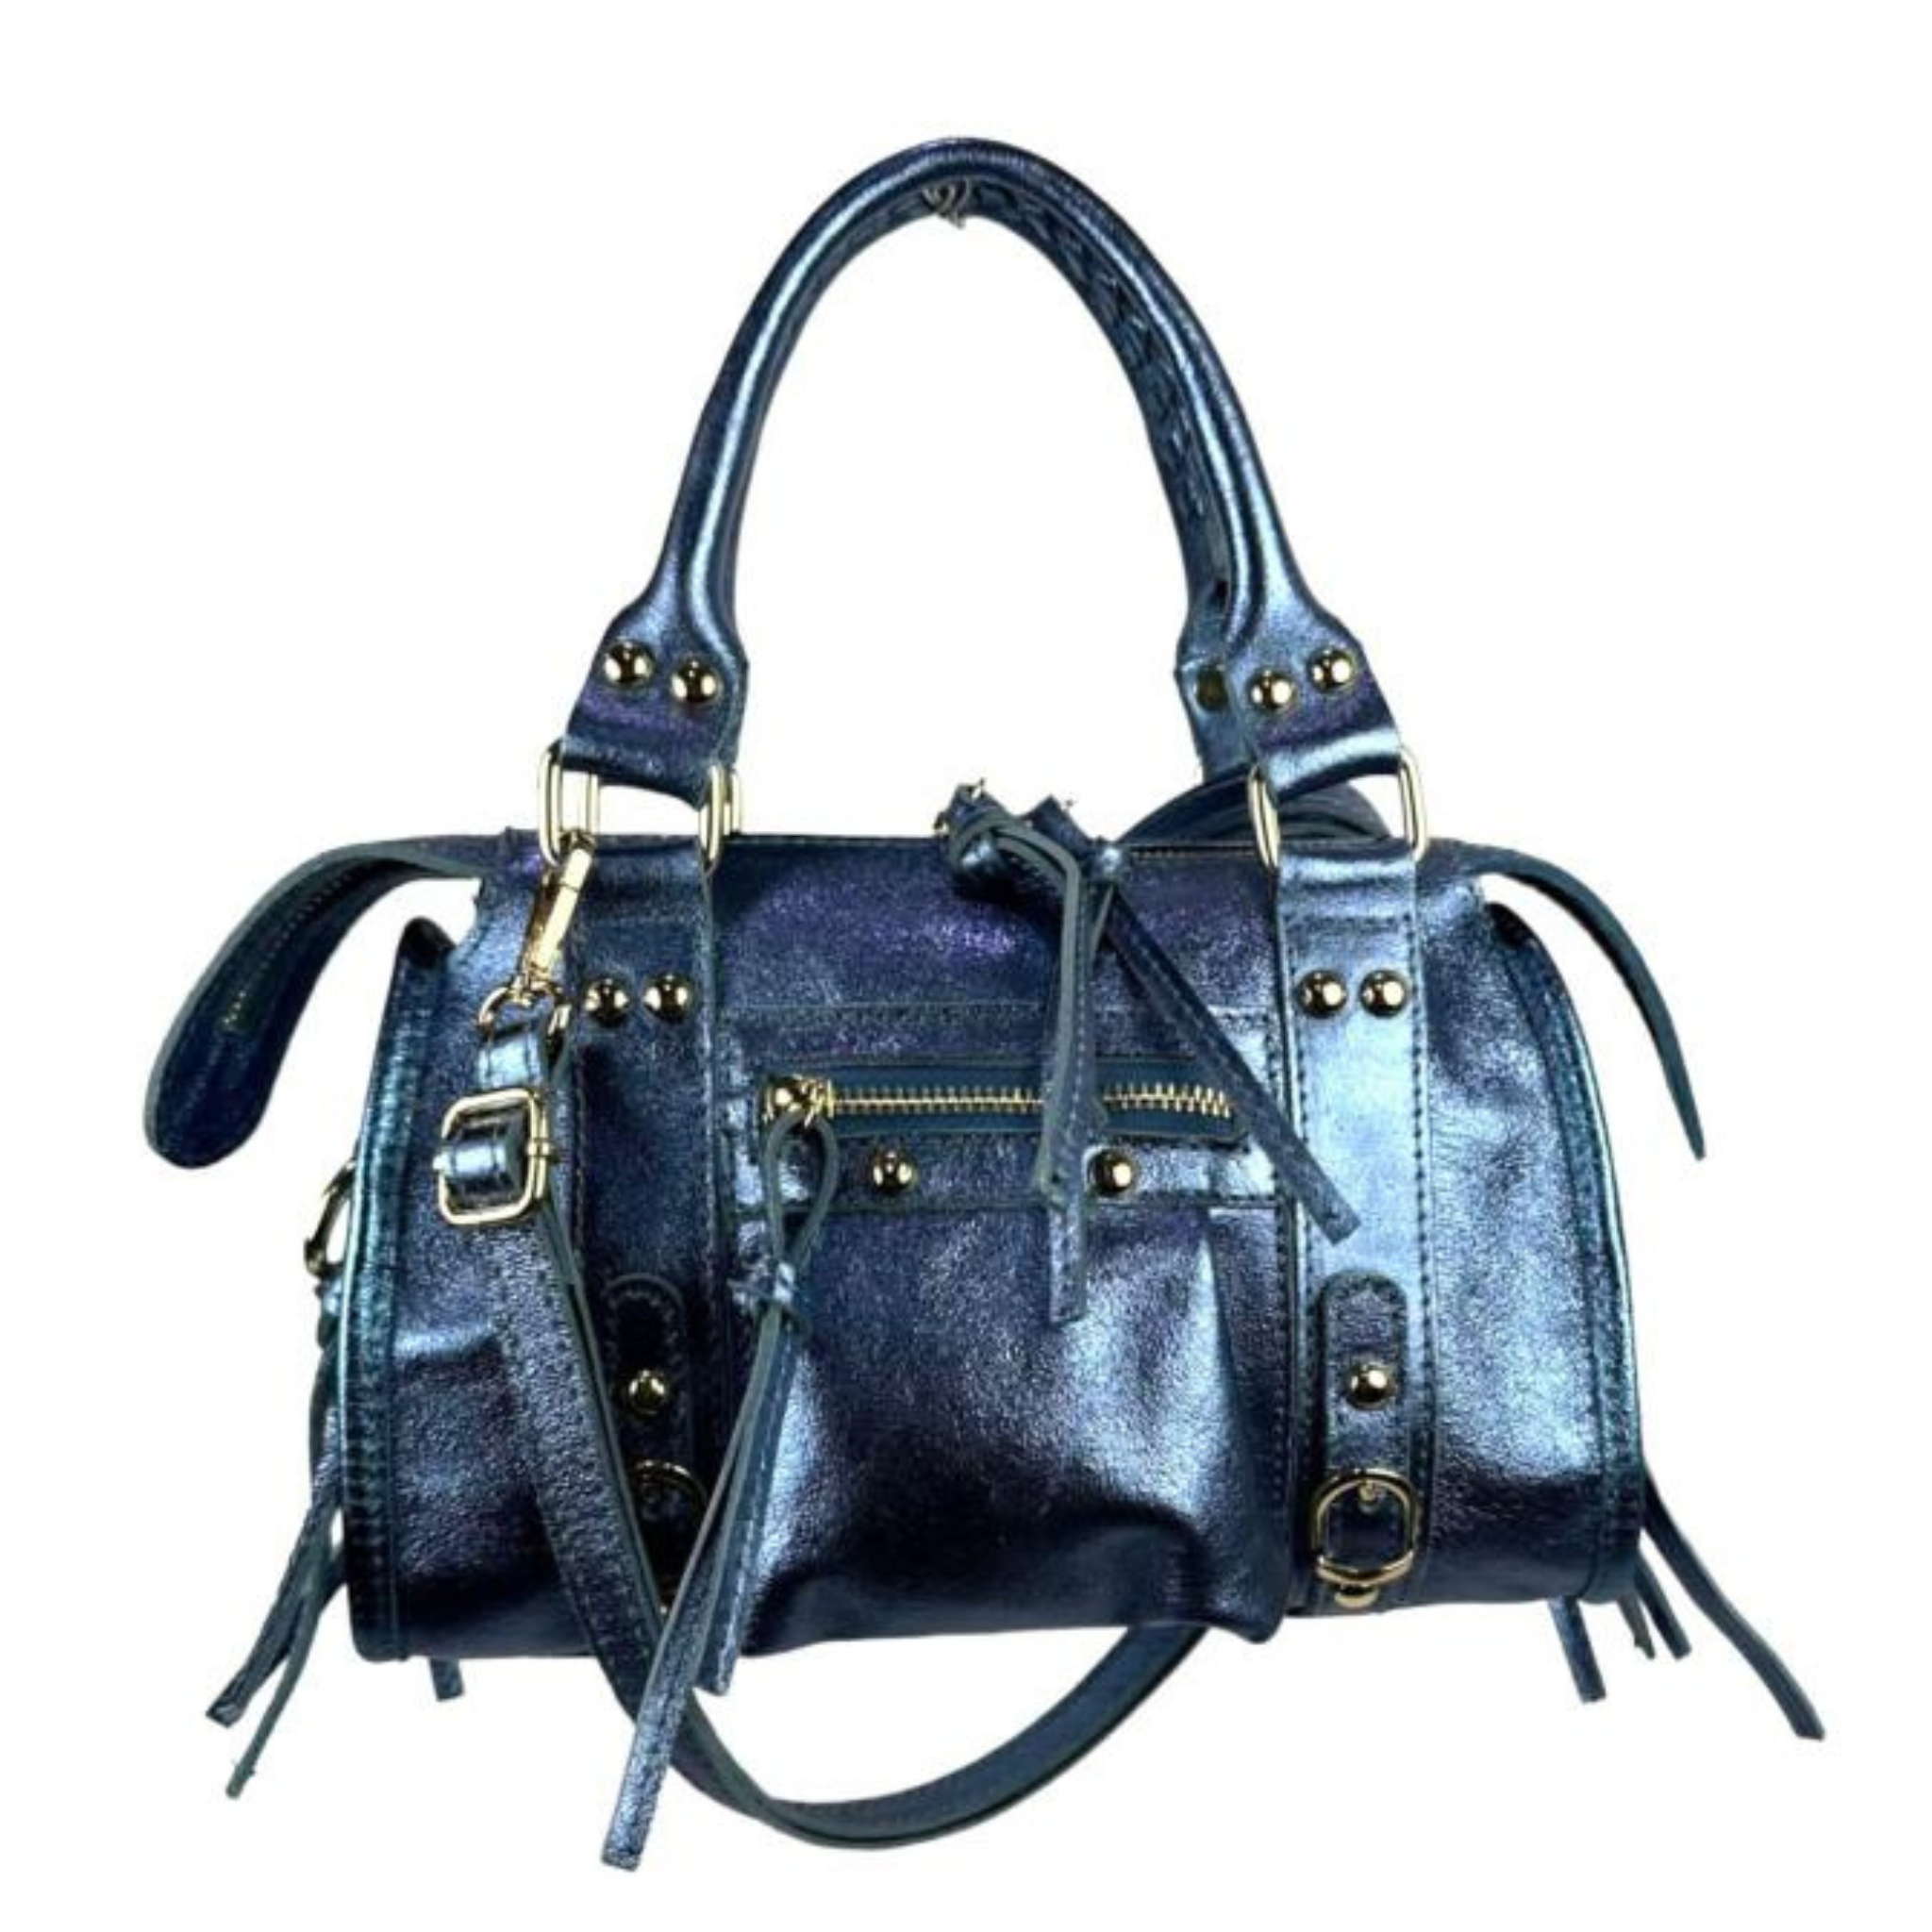 Italian Leather Handbag with Shiny Effect